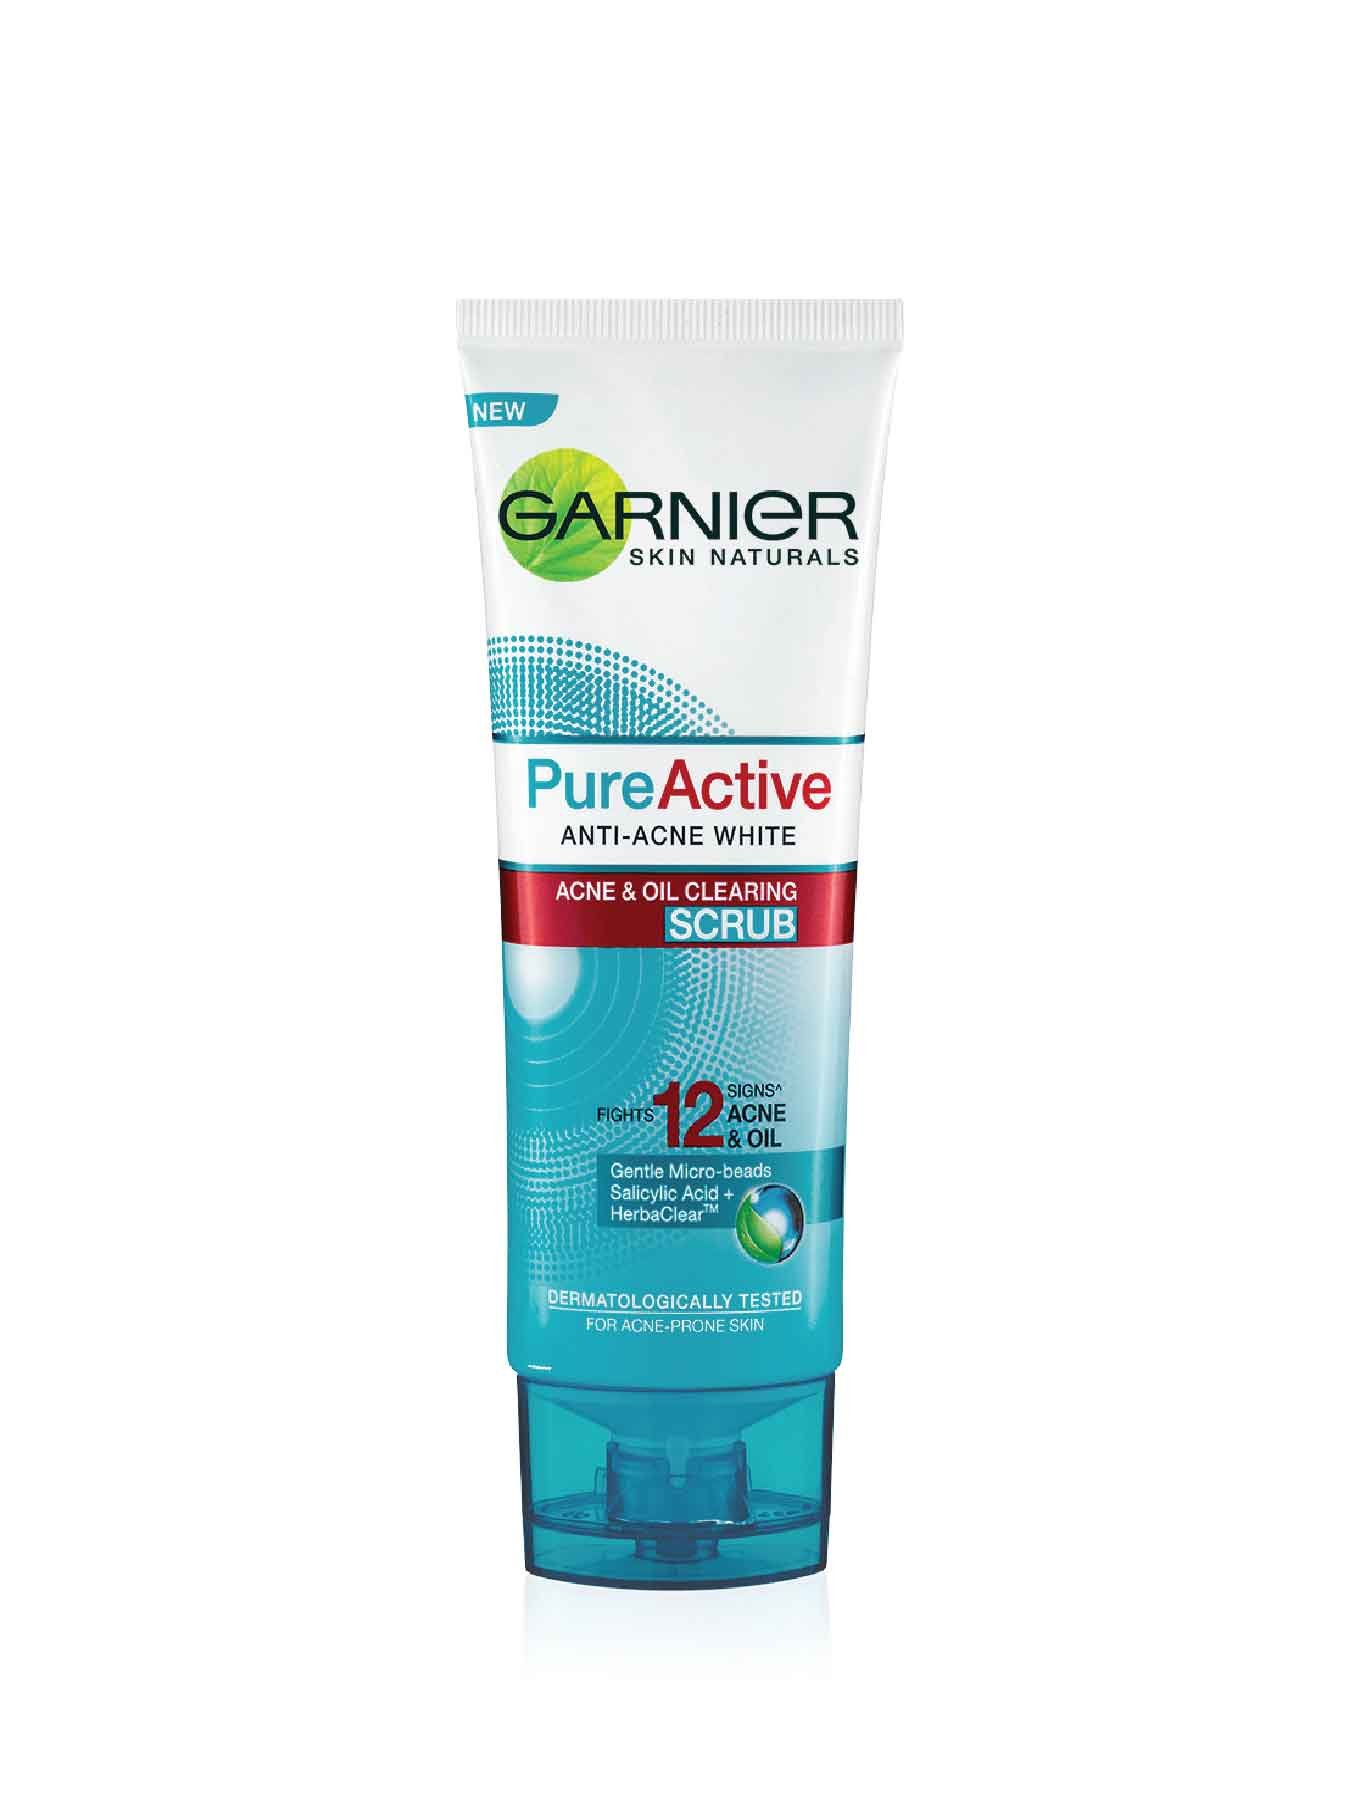 Garnier Pure Active, Anti-Acne White, Acne & Oil Clearing